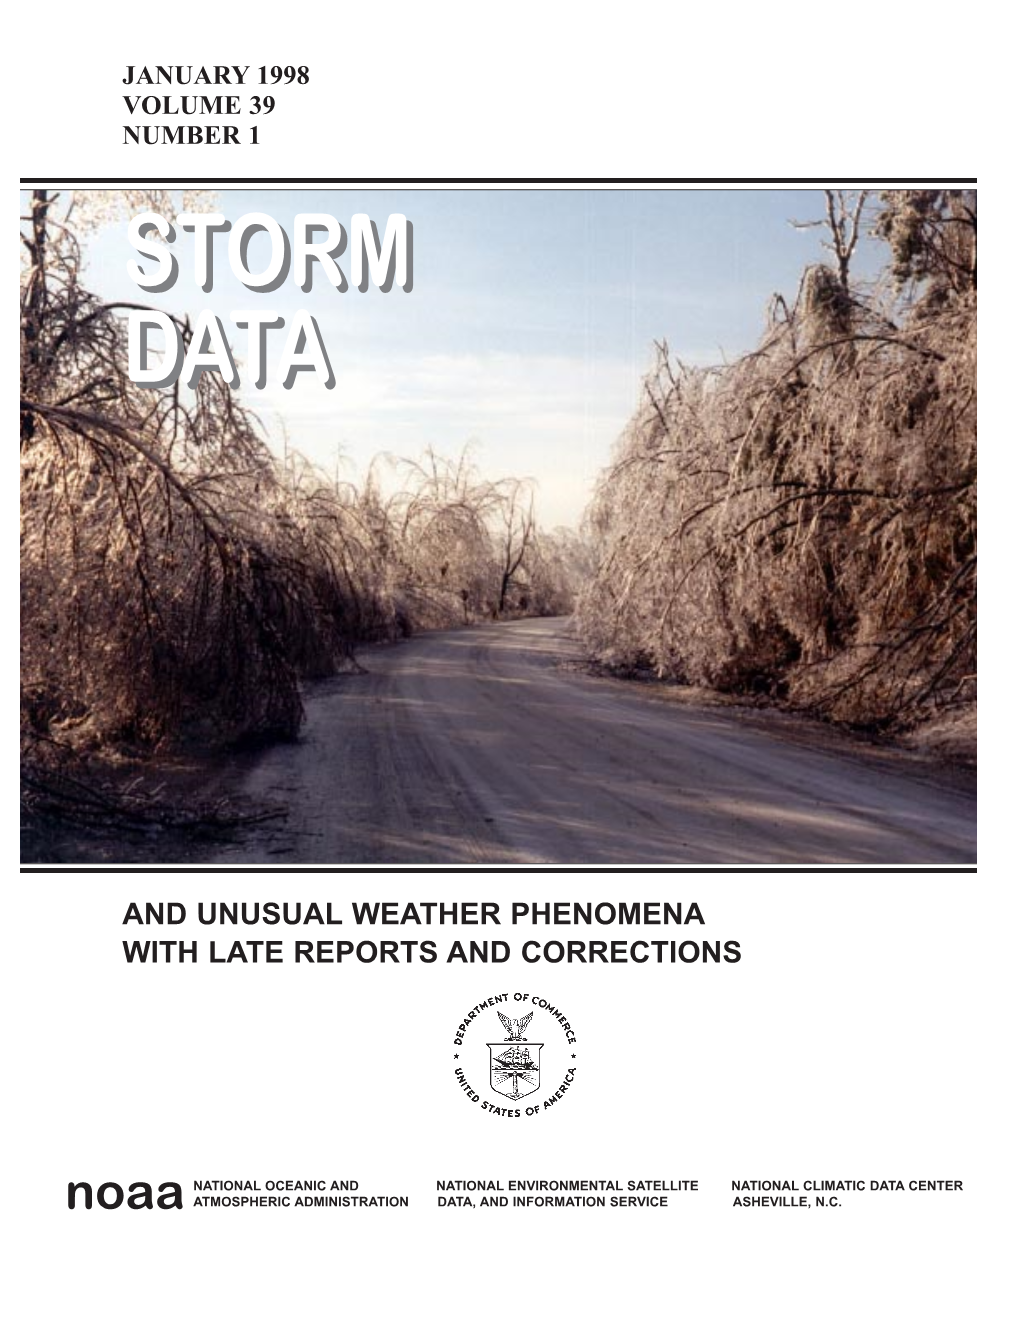 Storm Data and Unusual Weather Phenomena …………………………………………………………………………